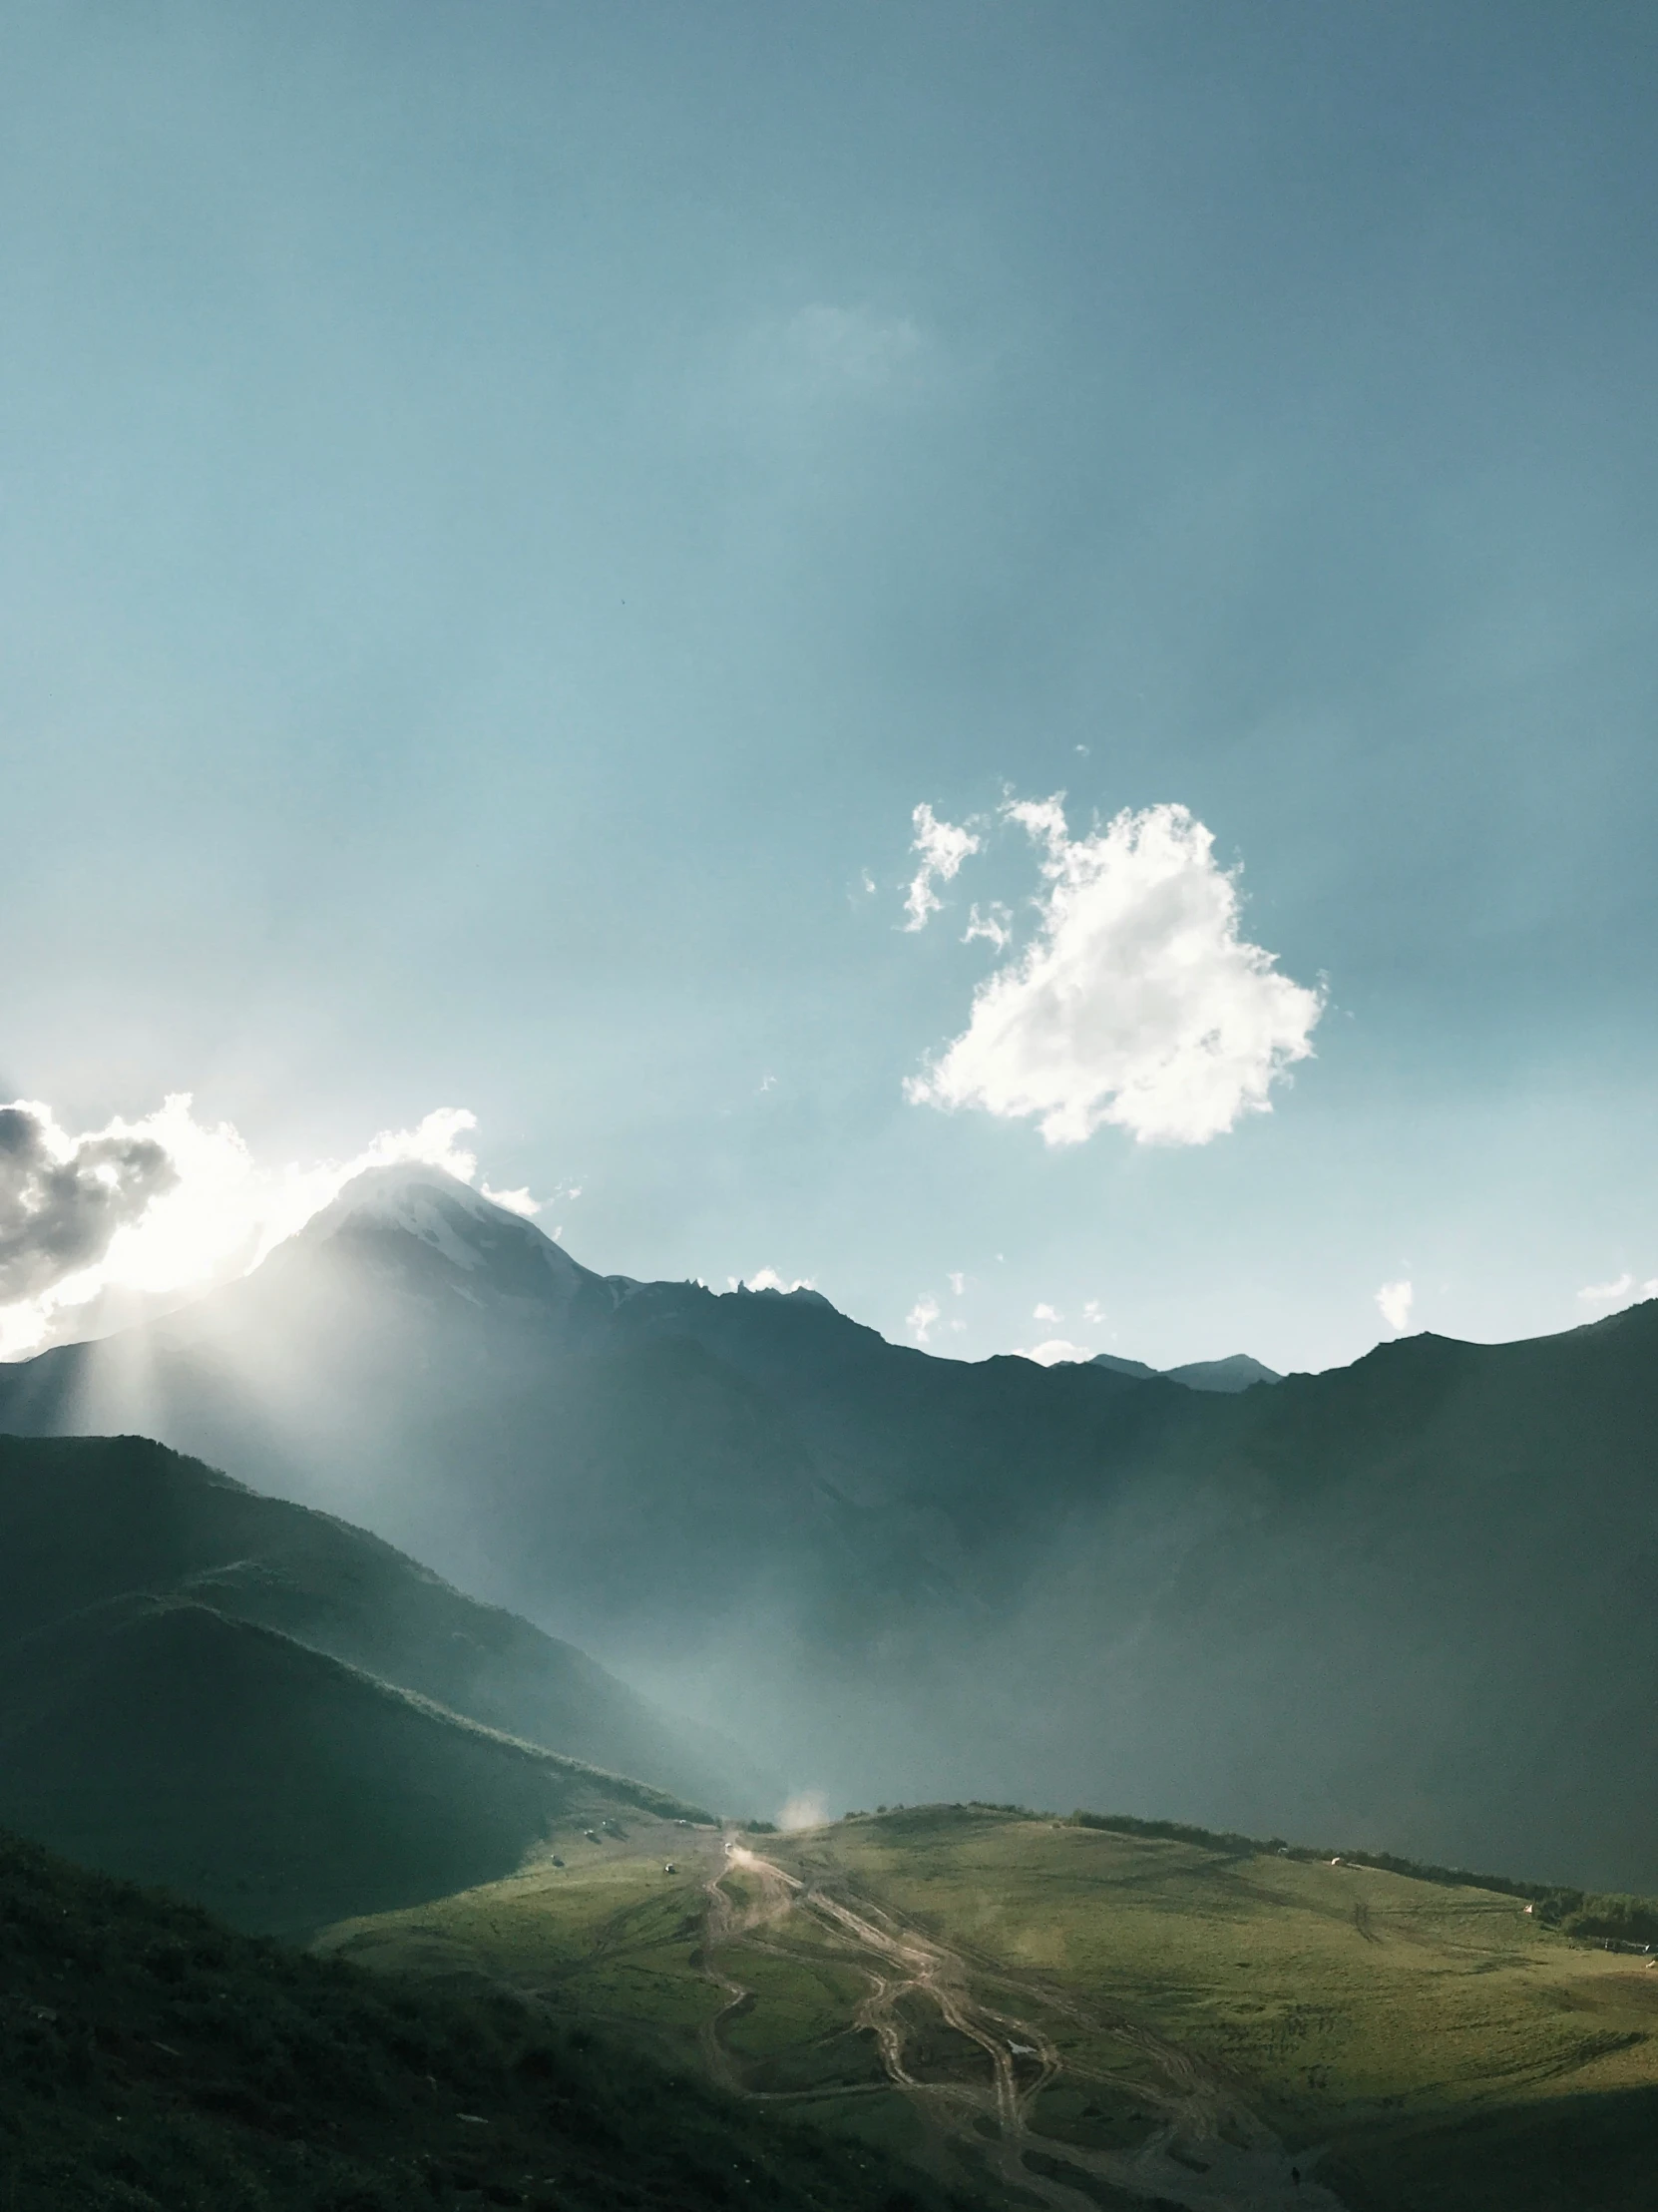 the sun shines through clouds over a mountain range